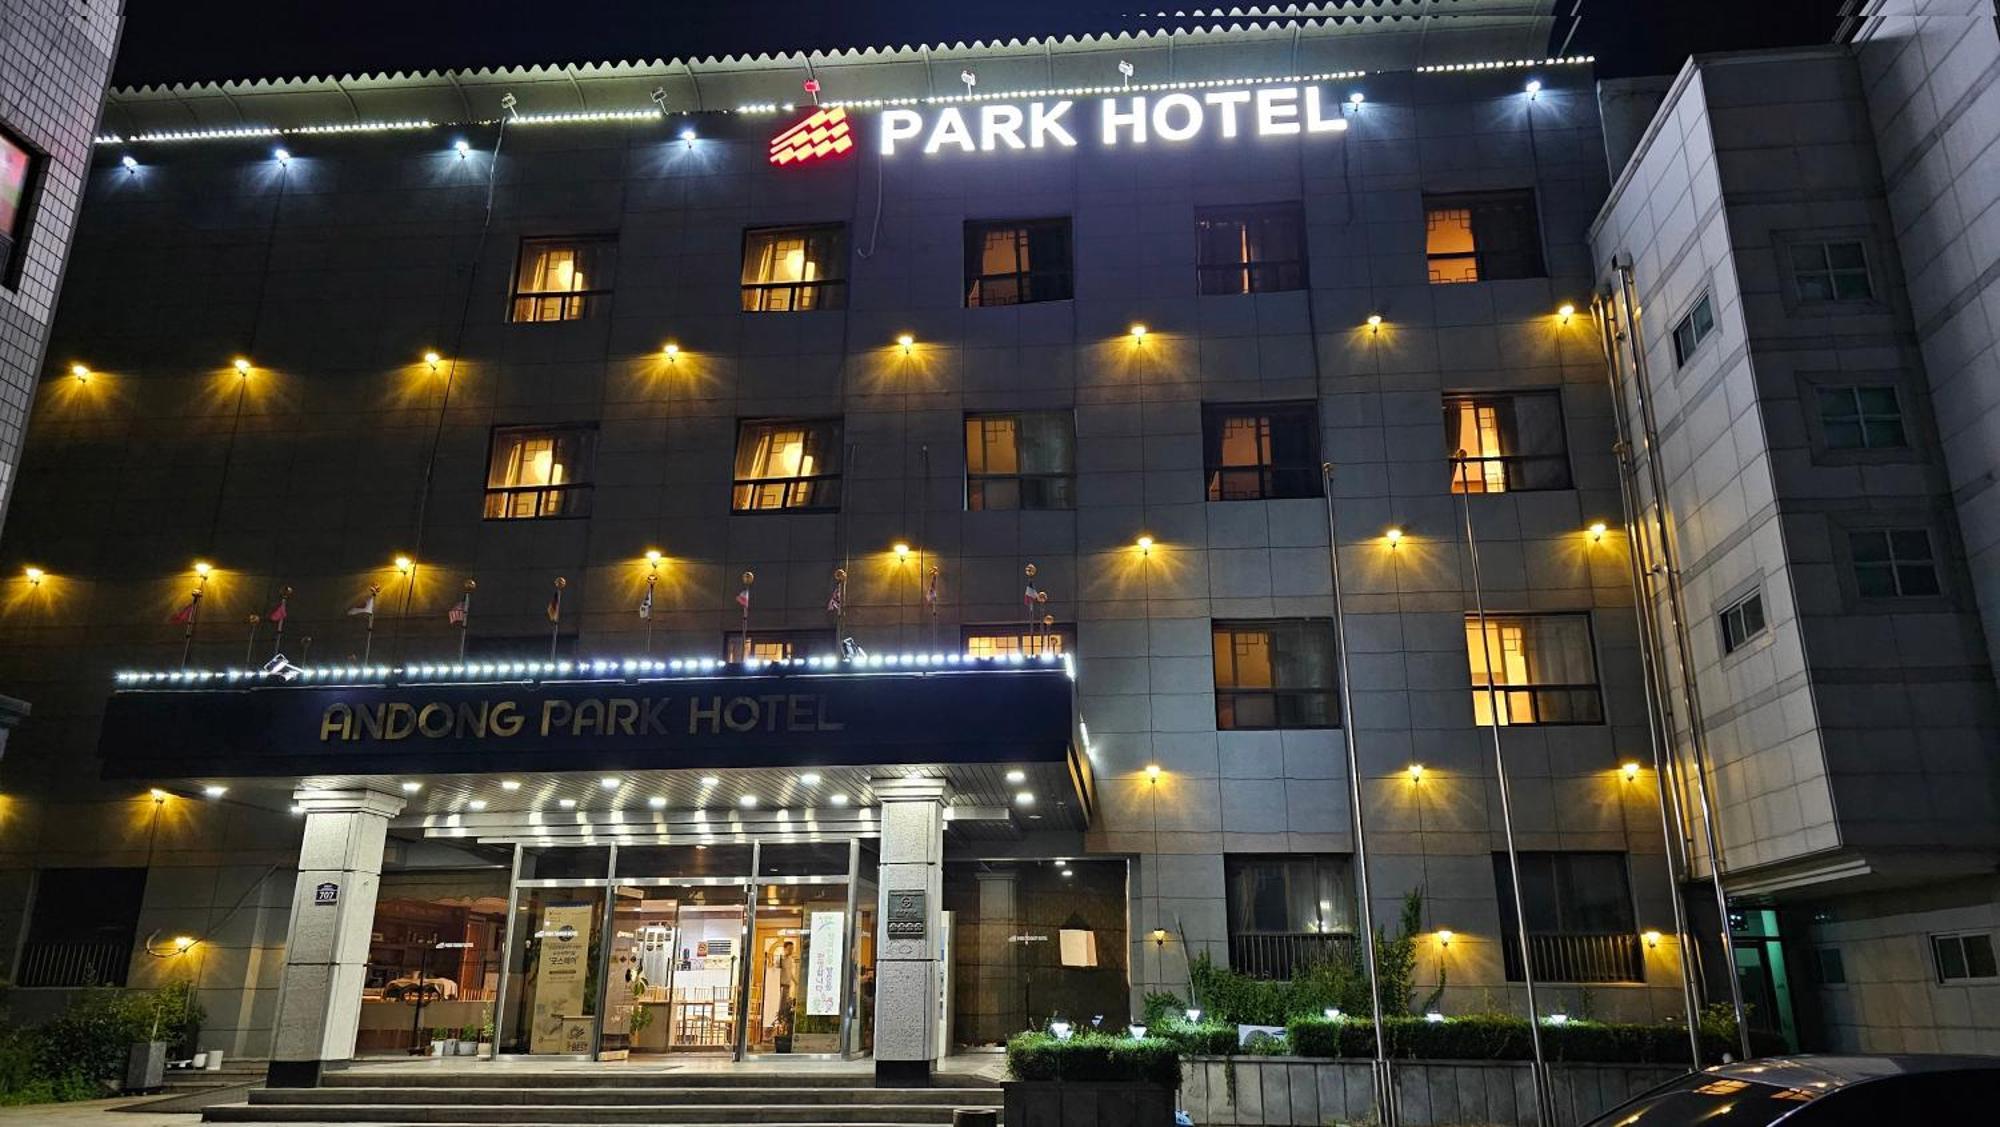 Goodstay Andong Park Hotel Esterno foto